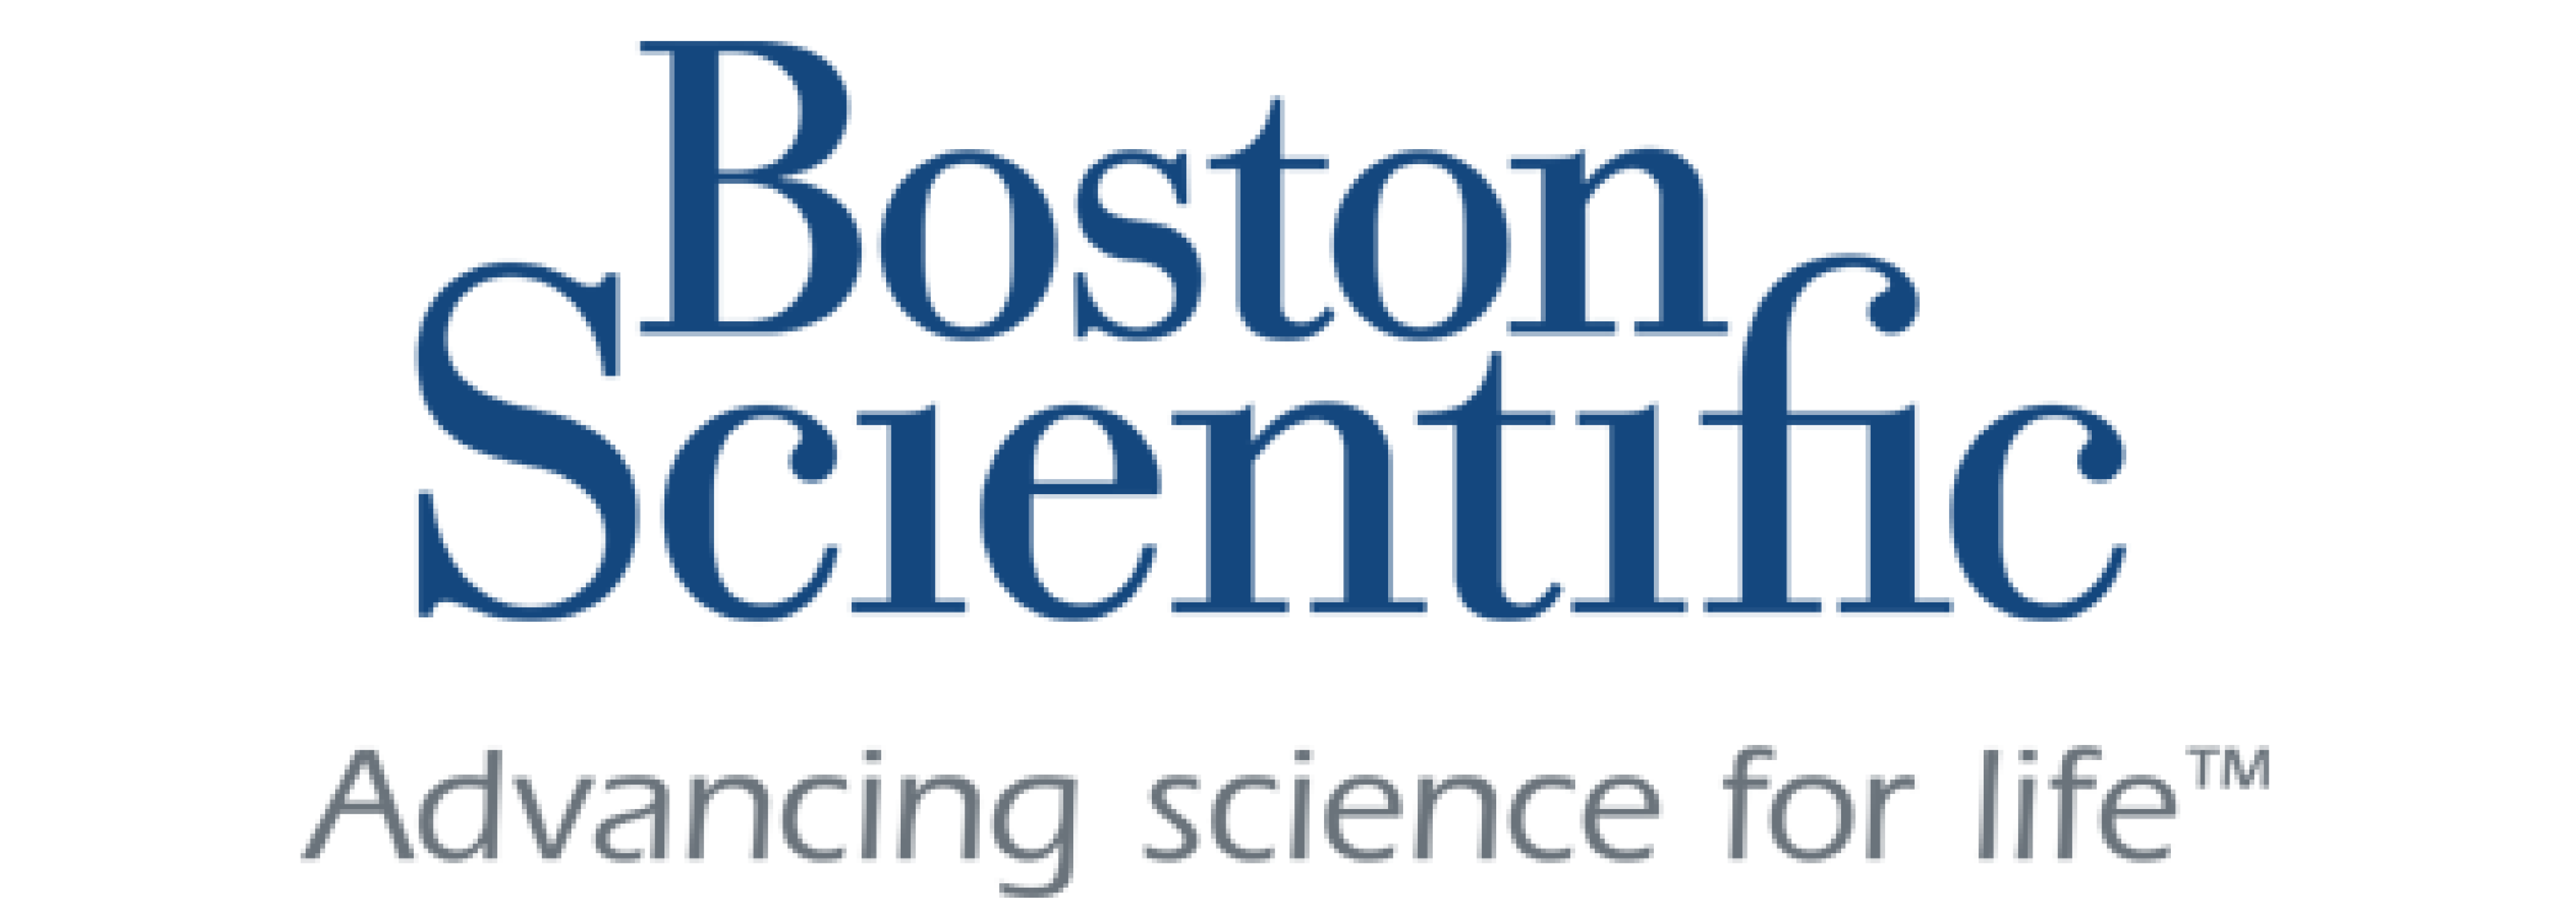 Boston Scientific Logo with tagline "advancing science for life"